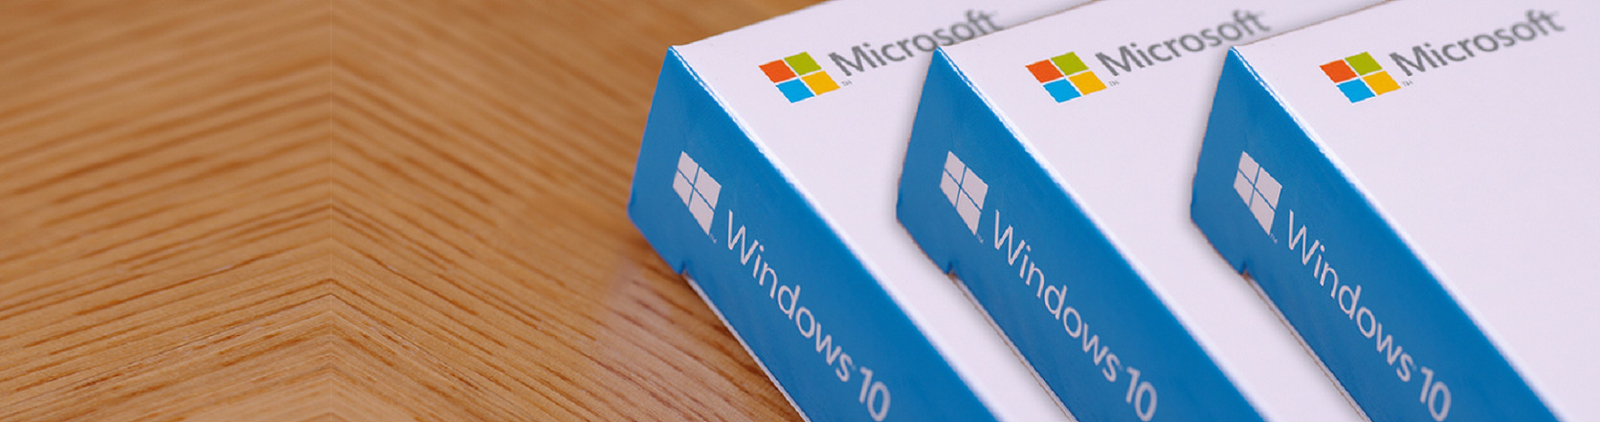 Profesional de Microsoft Windows 10